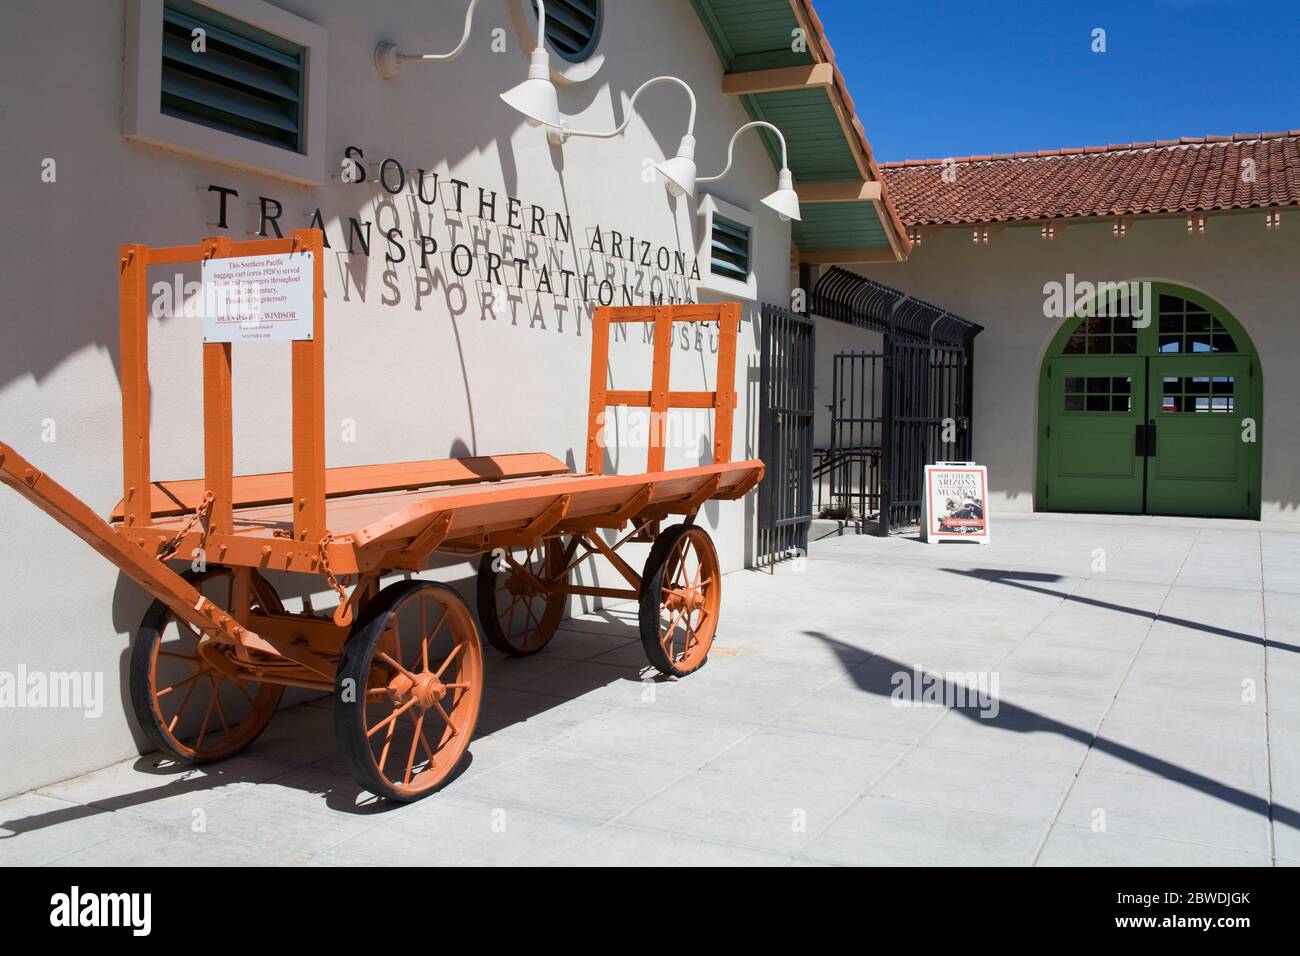 Southern Arizona Transportation Museum, Tucson, Pima County, Arizona, USA Stock Photo